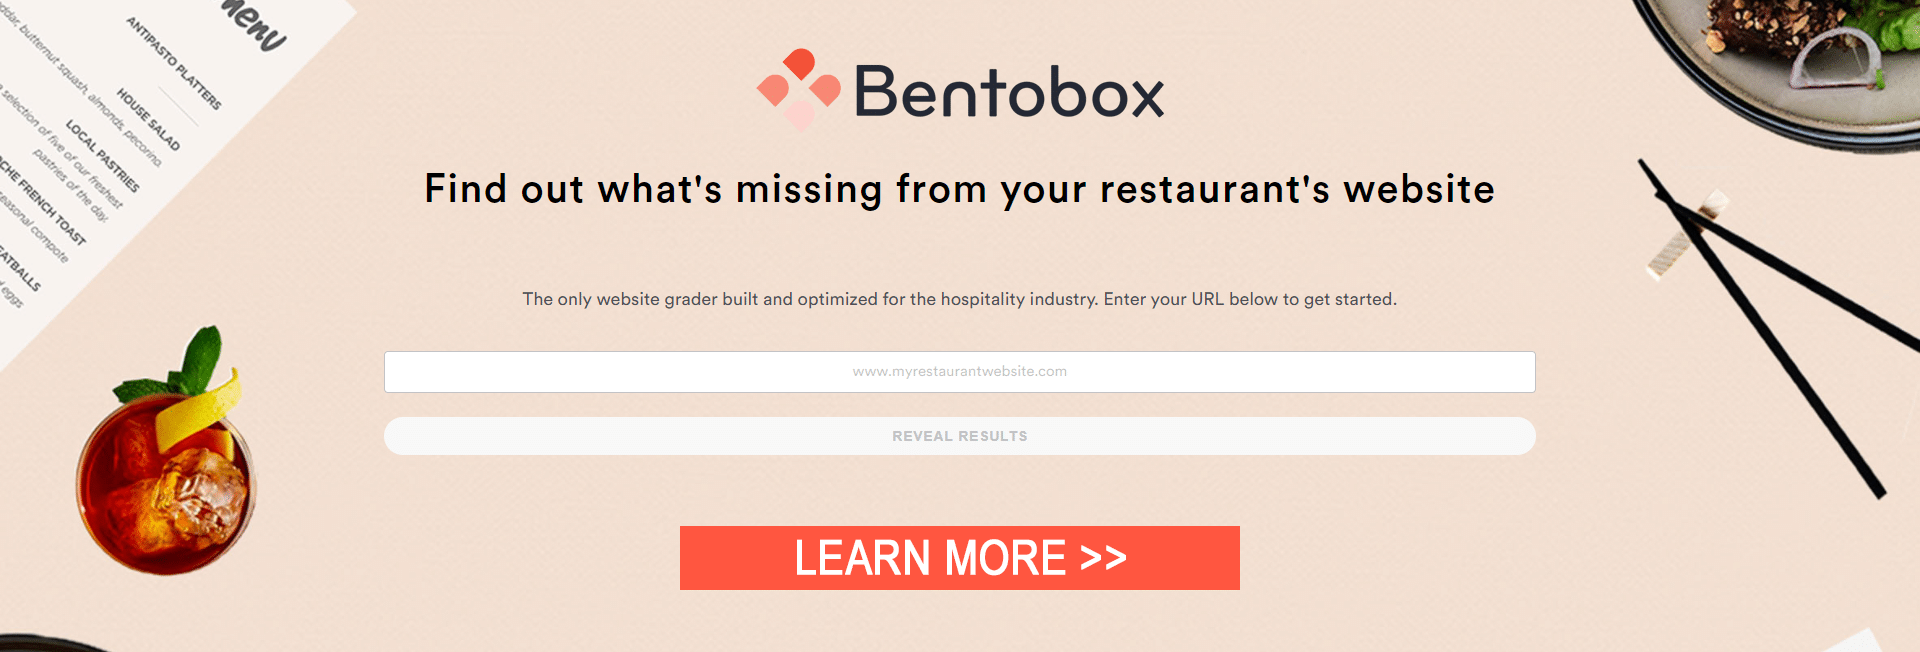 Bentobox ad - restaurant websites